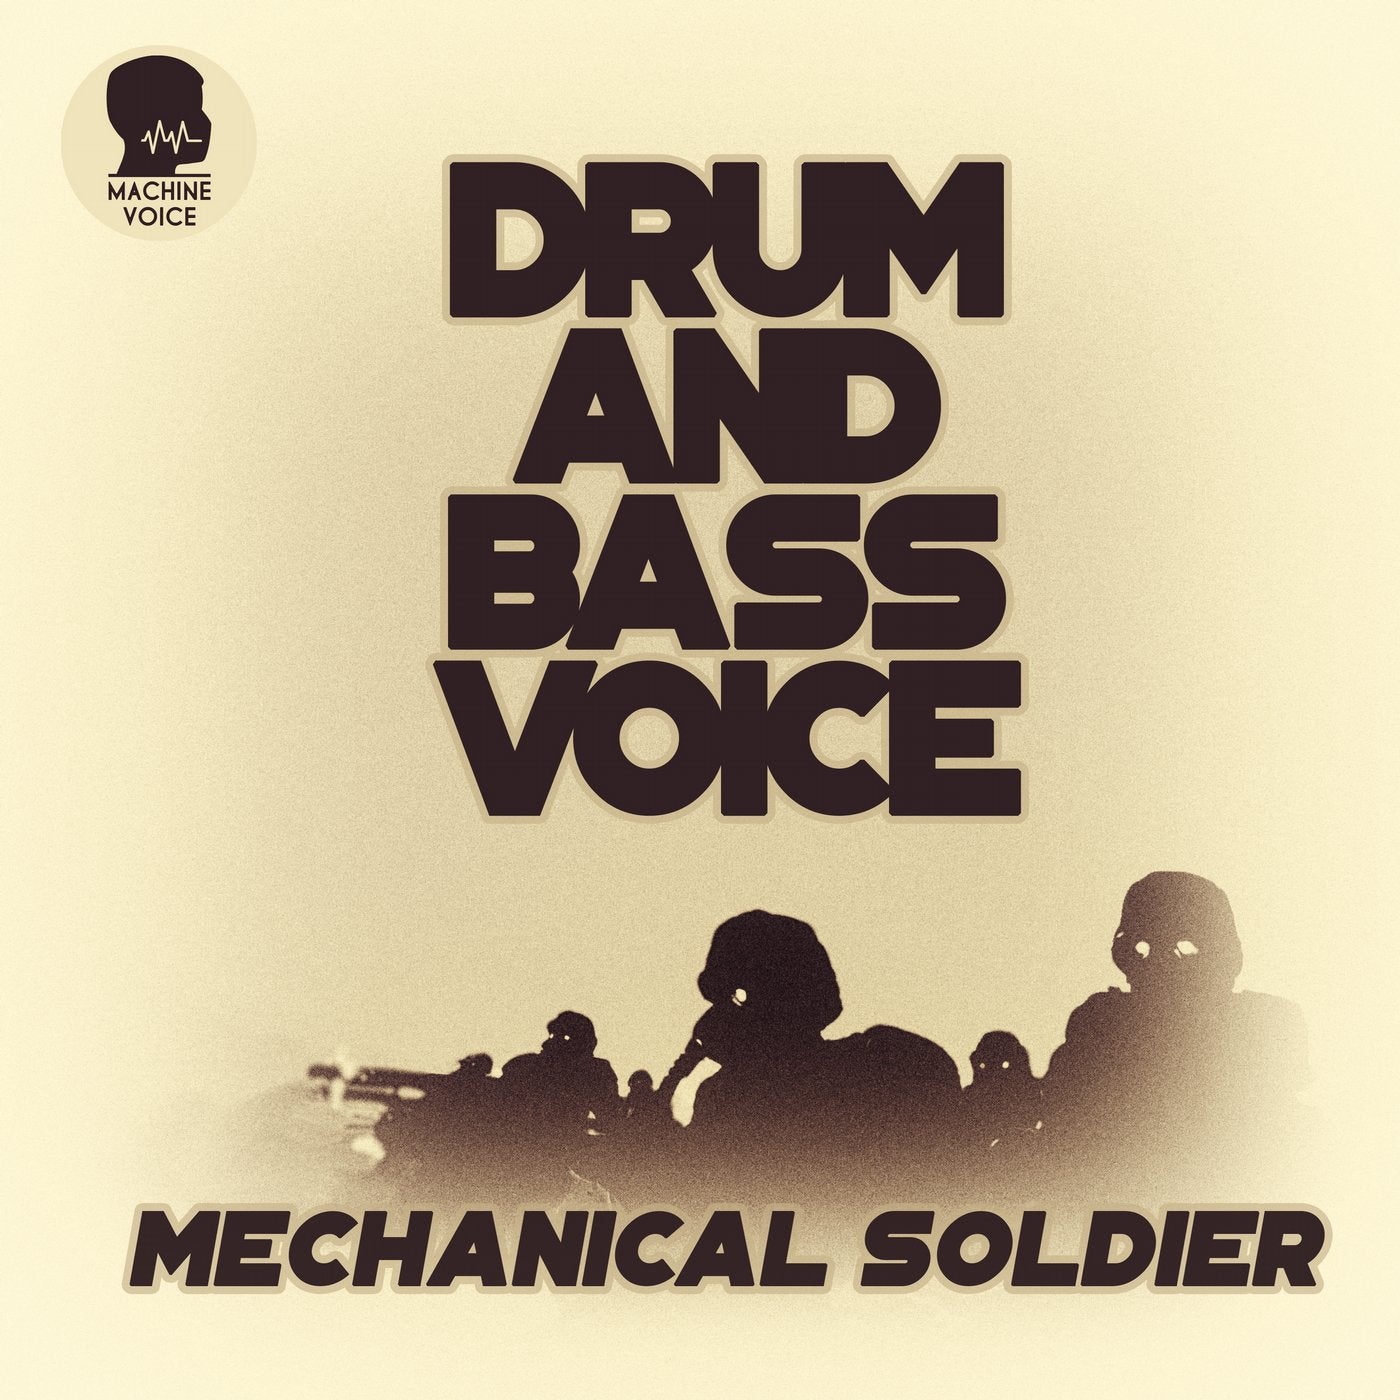 Bass Voice. Mechanical Soldier mp3. Drum and Bass Art. Бас миі. Mechanic voice